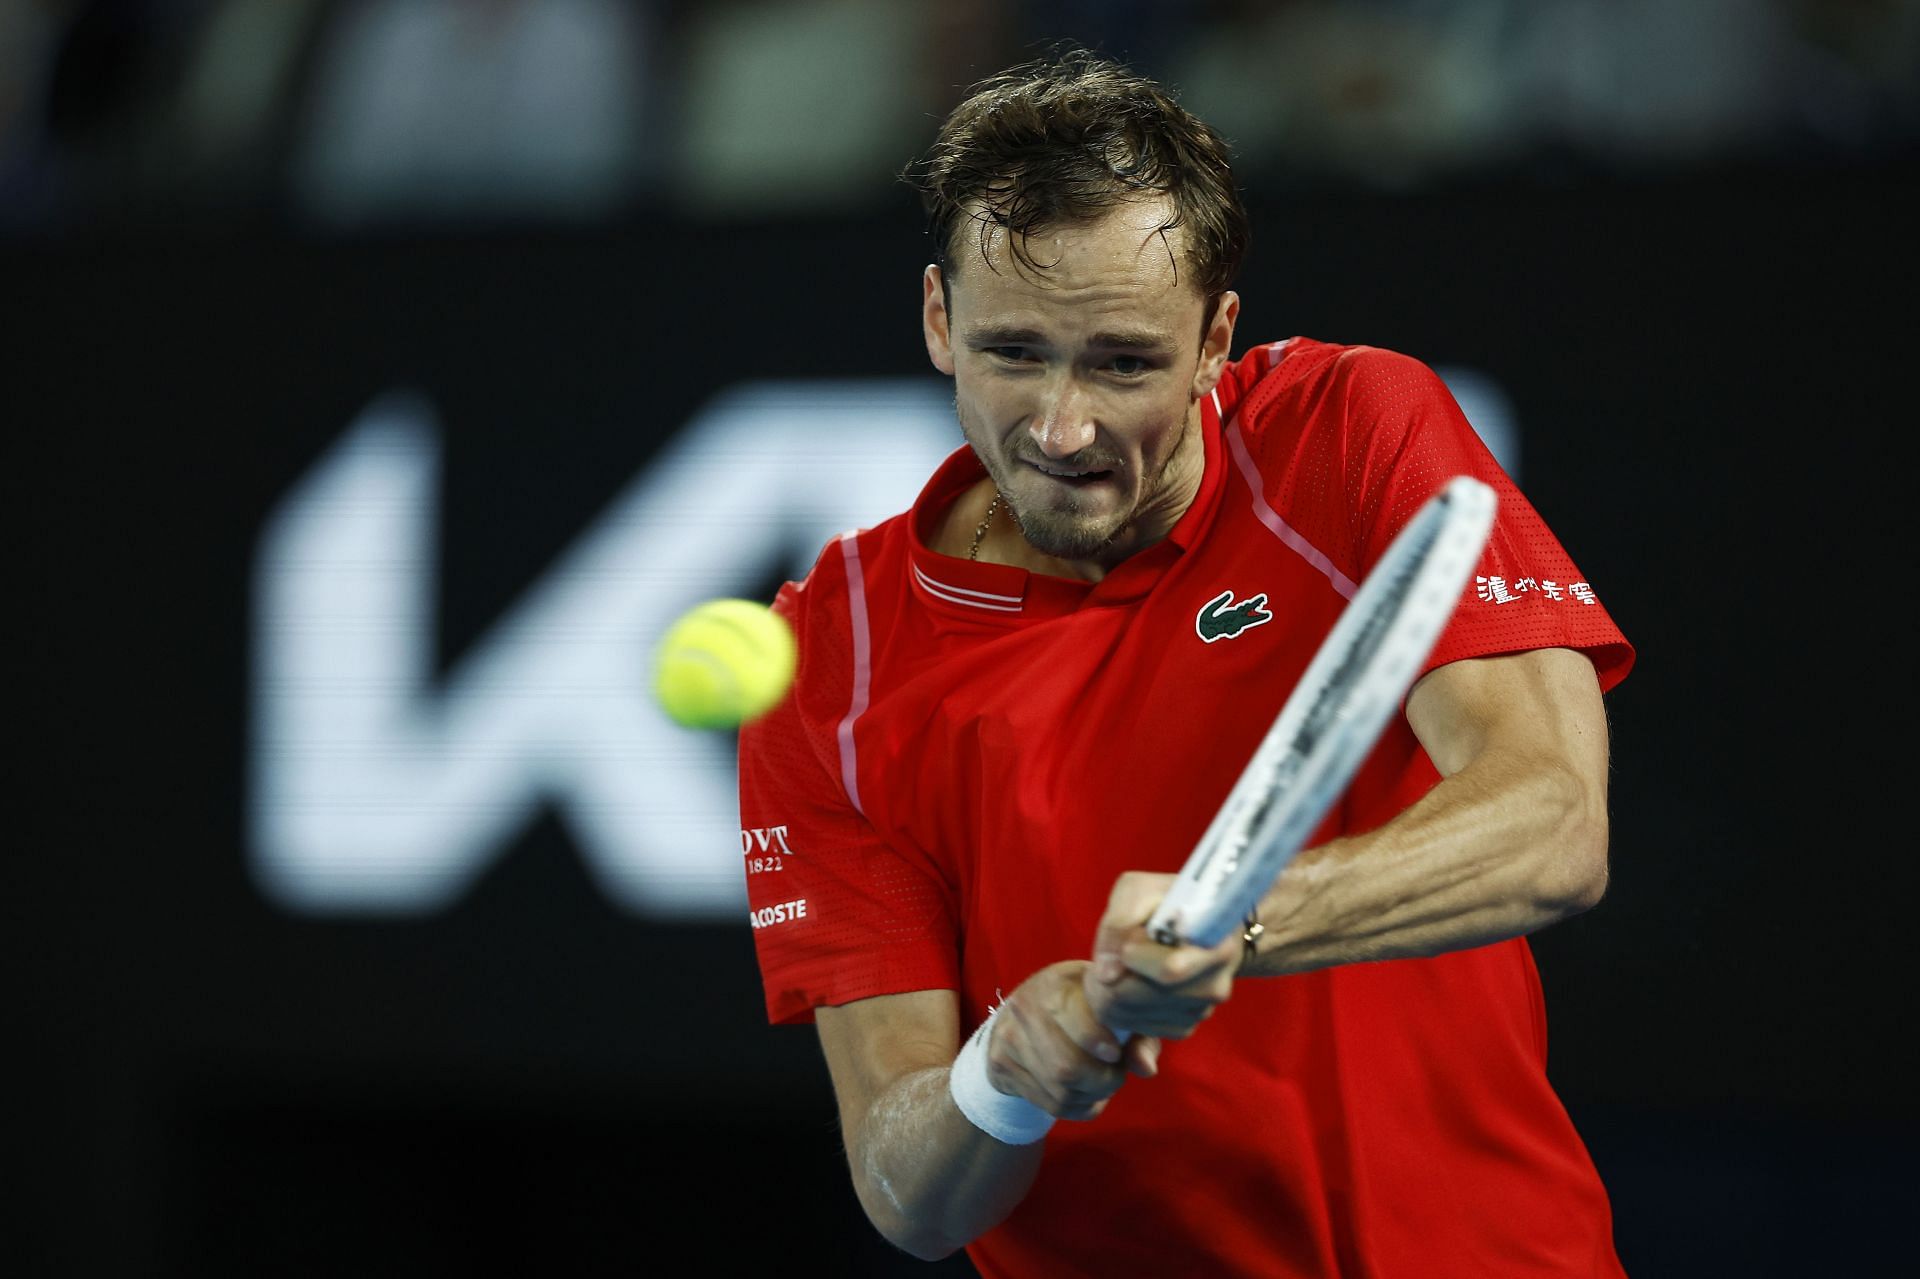 Medvedev strikes the ball at the 2023 Australian Open